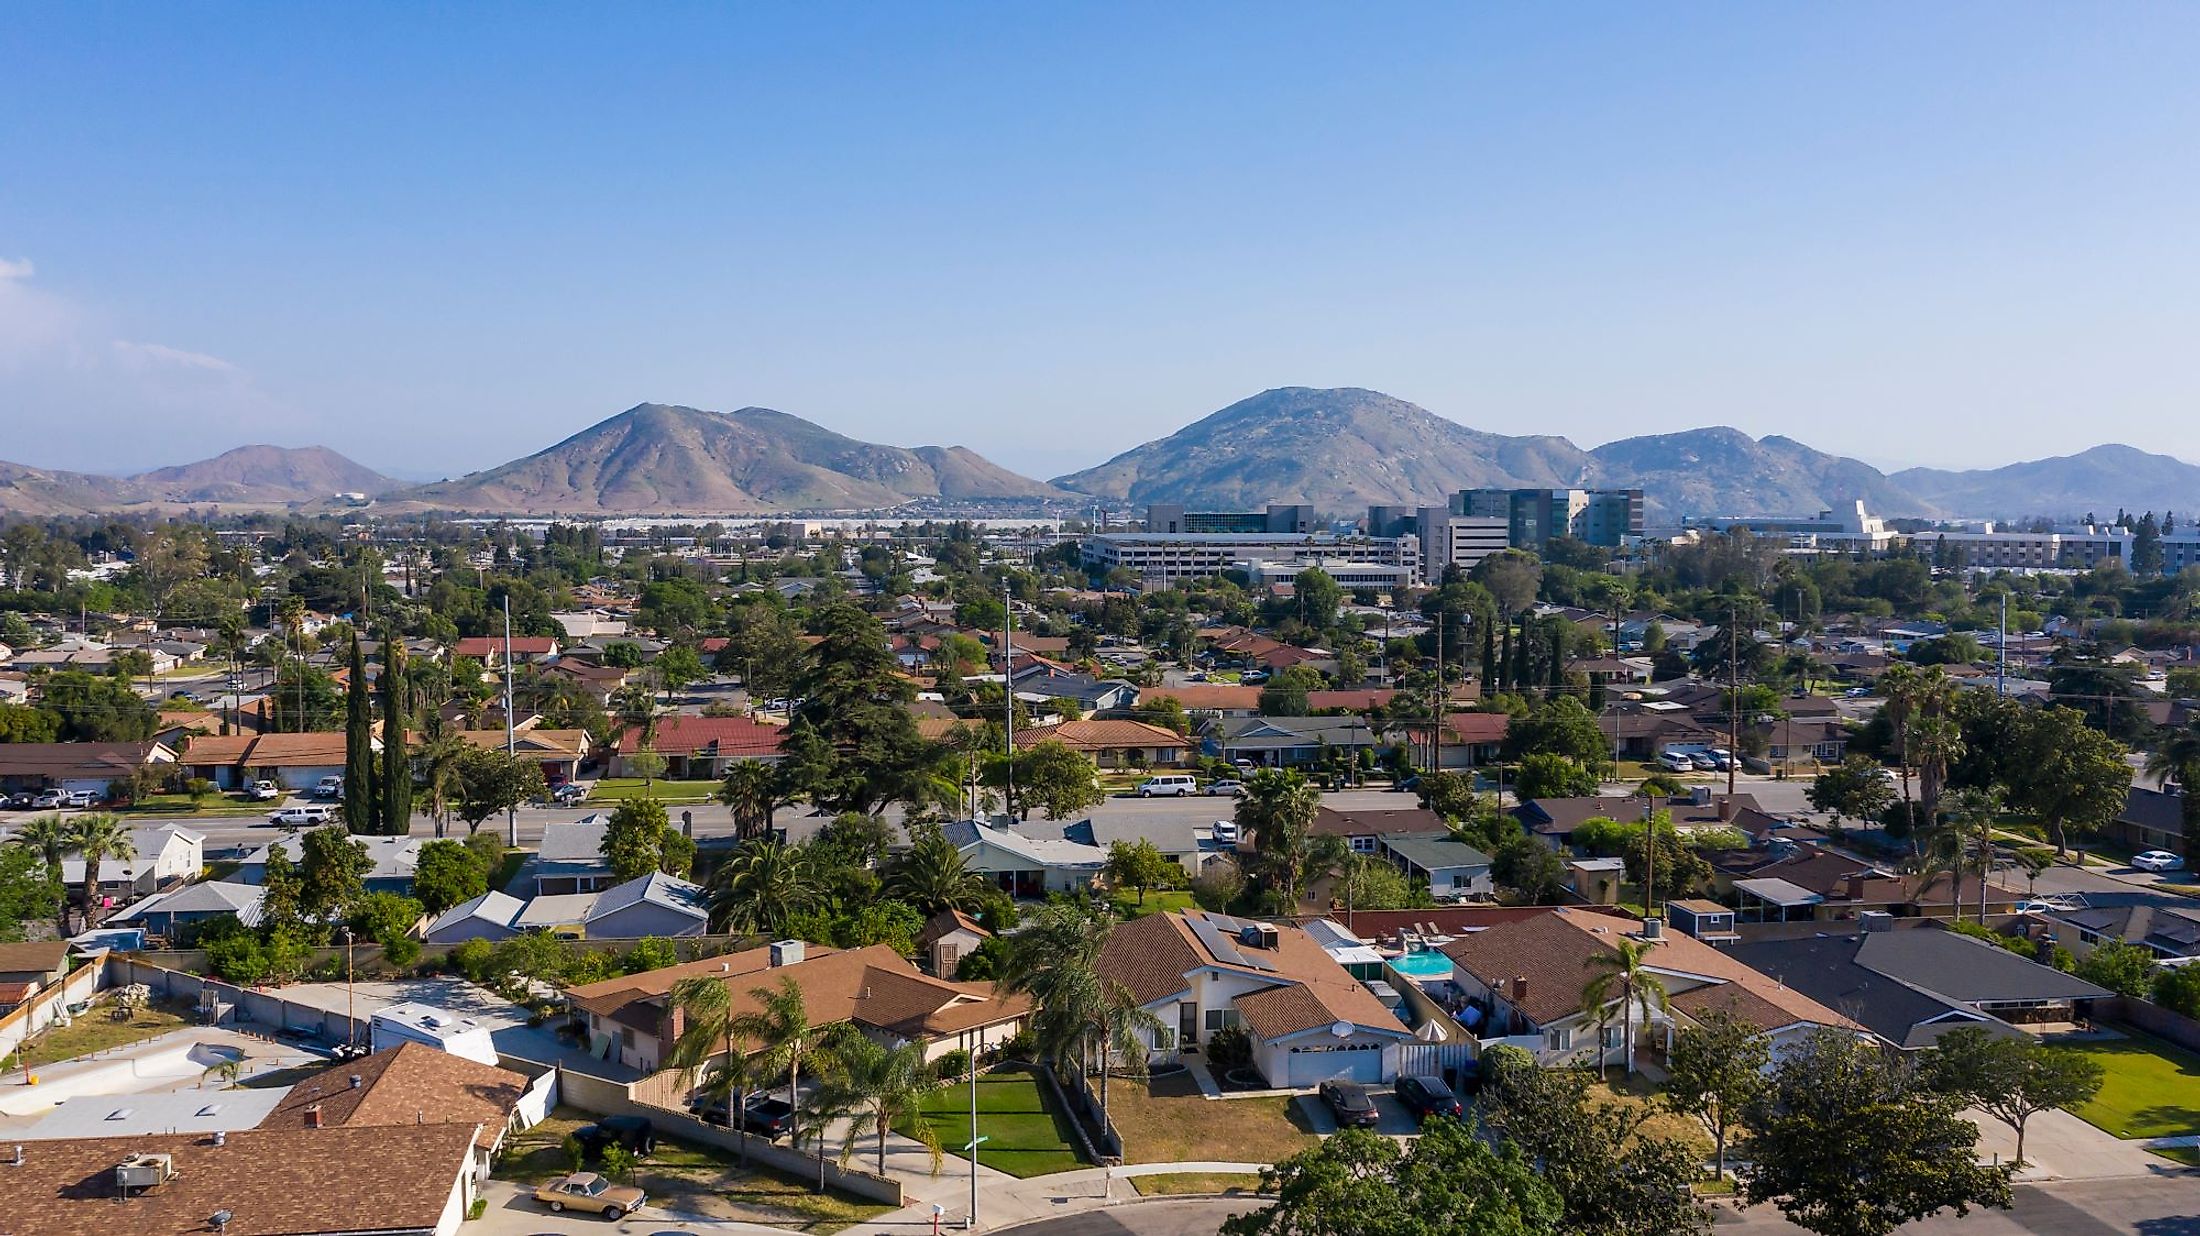 Daytime aerial view of the city center of Fontana, California. 